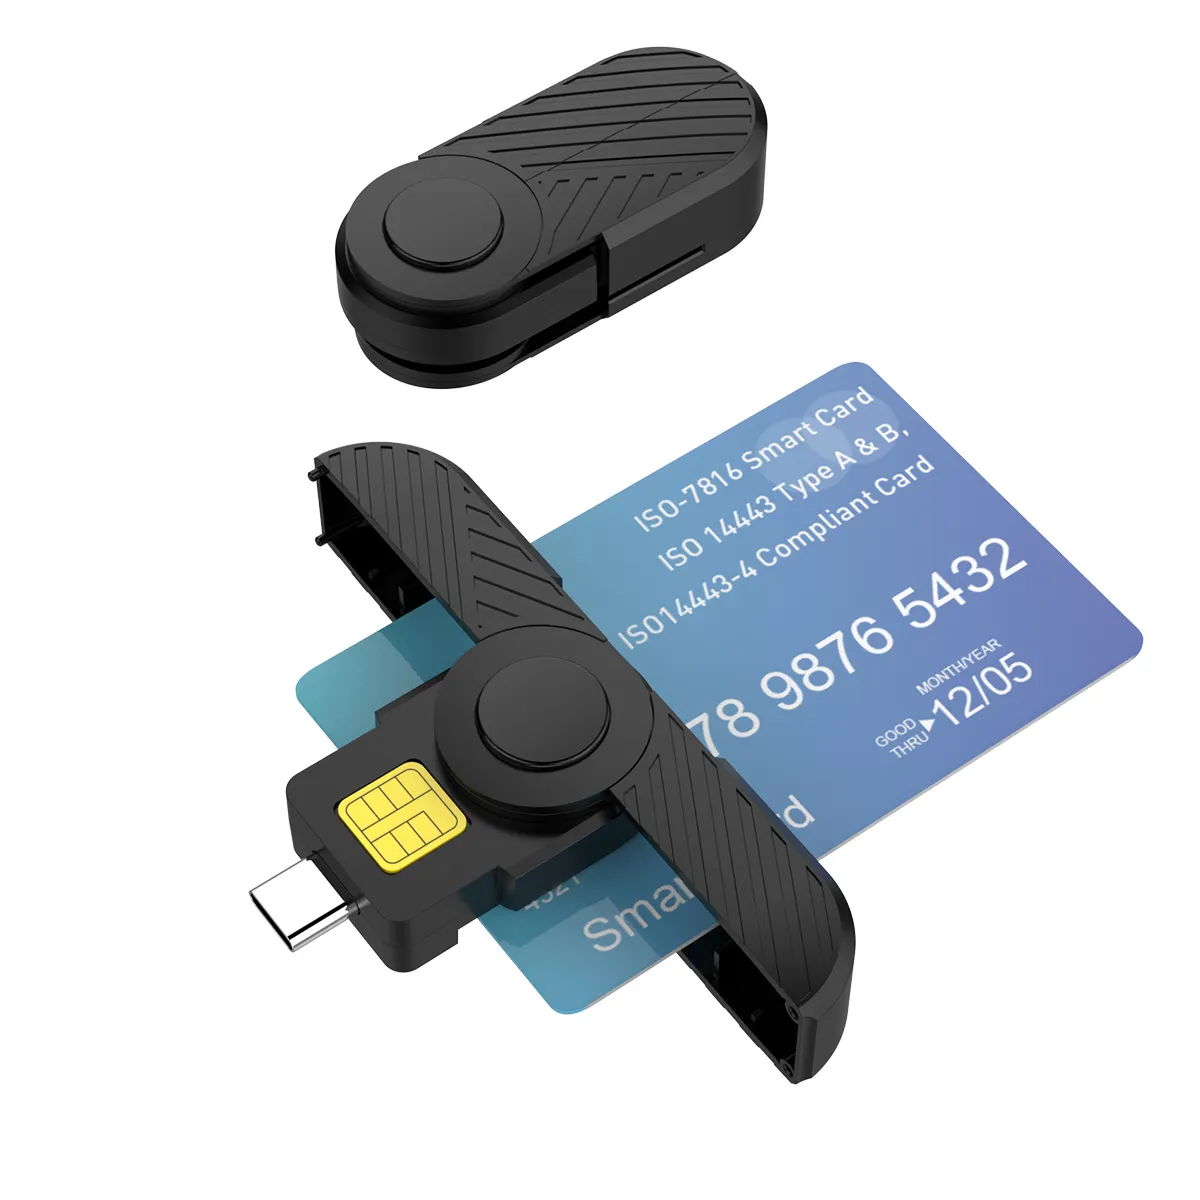 USB Mobile Debit Bank Card Reader Adapter Portable Mini USB Type-C Smart Card Reader